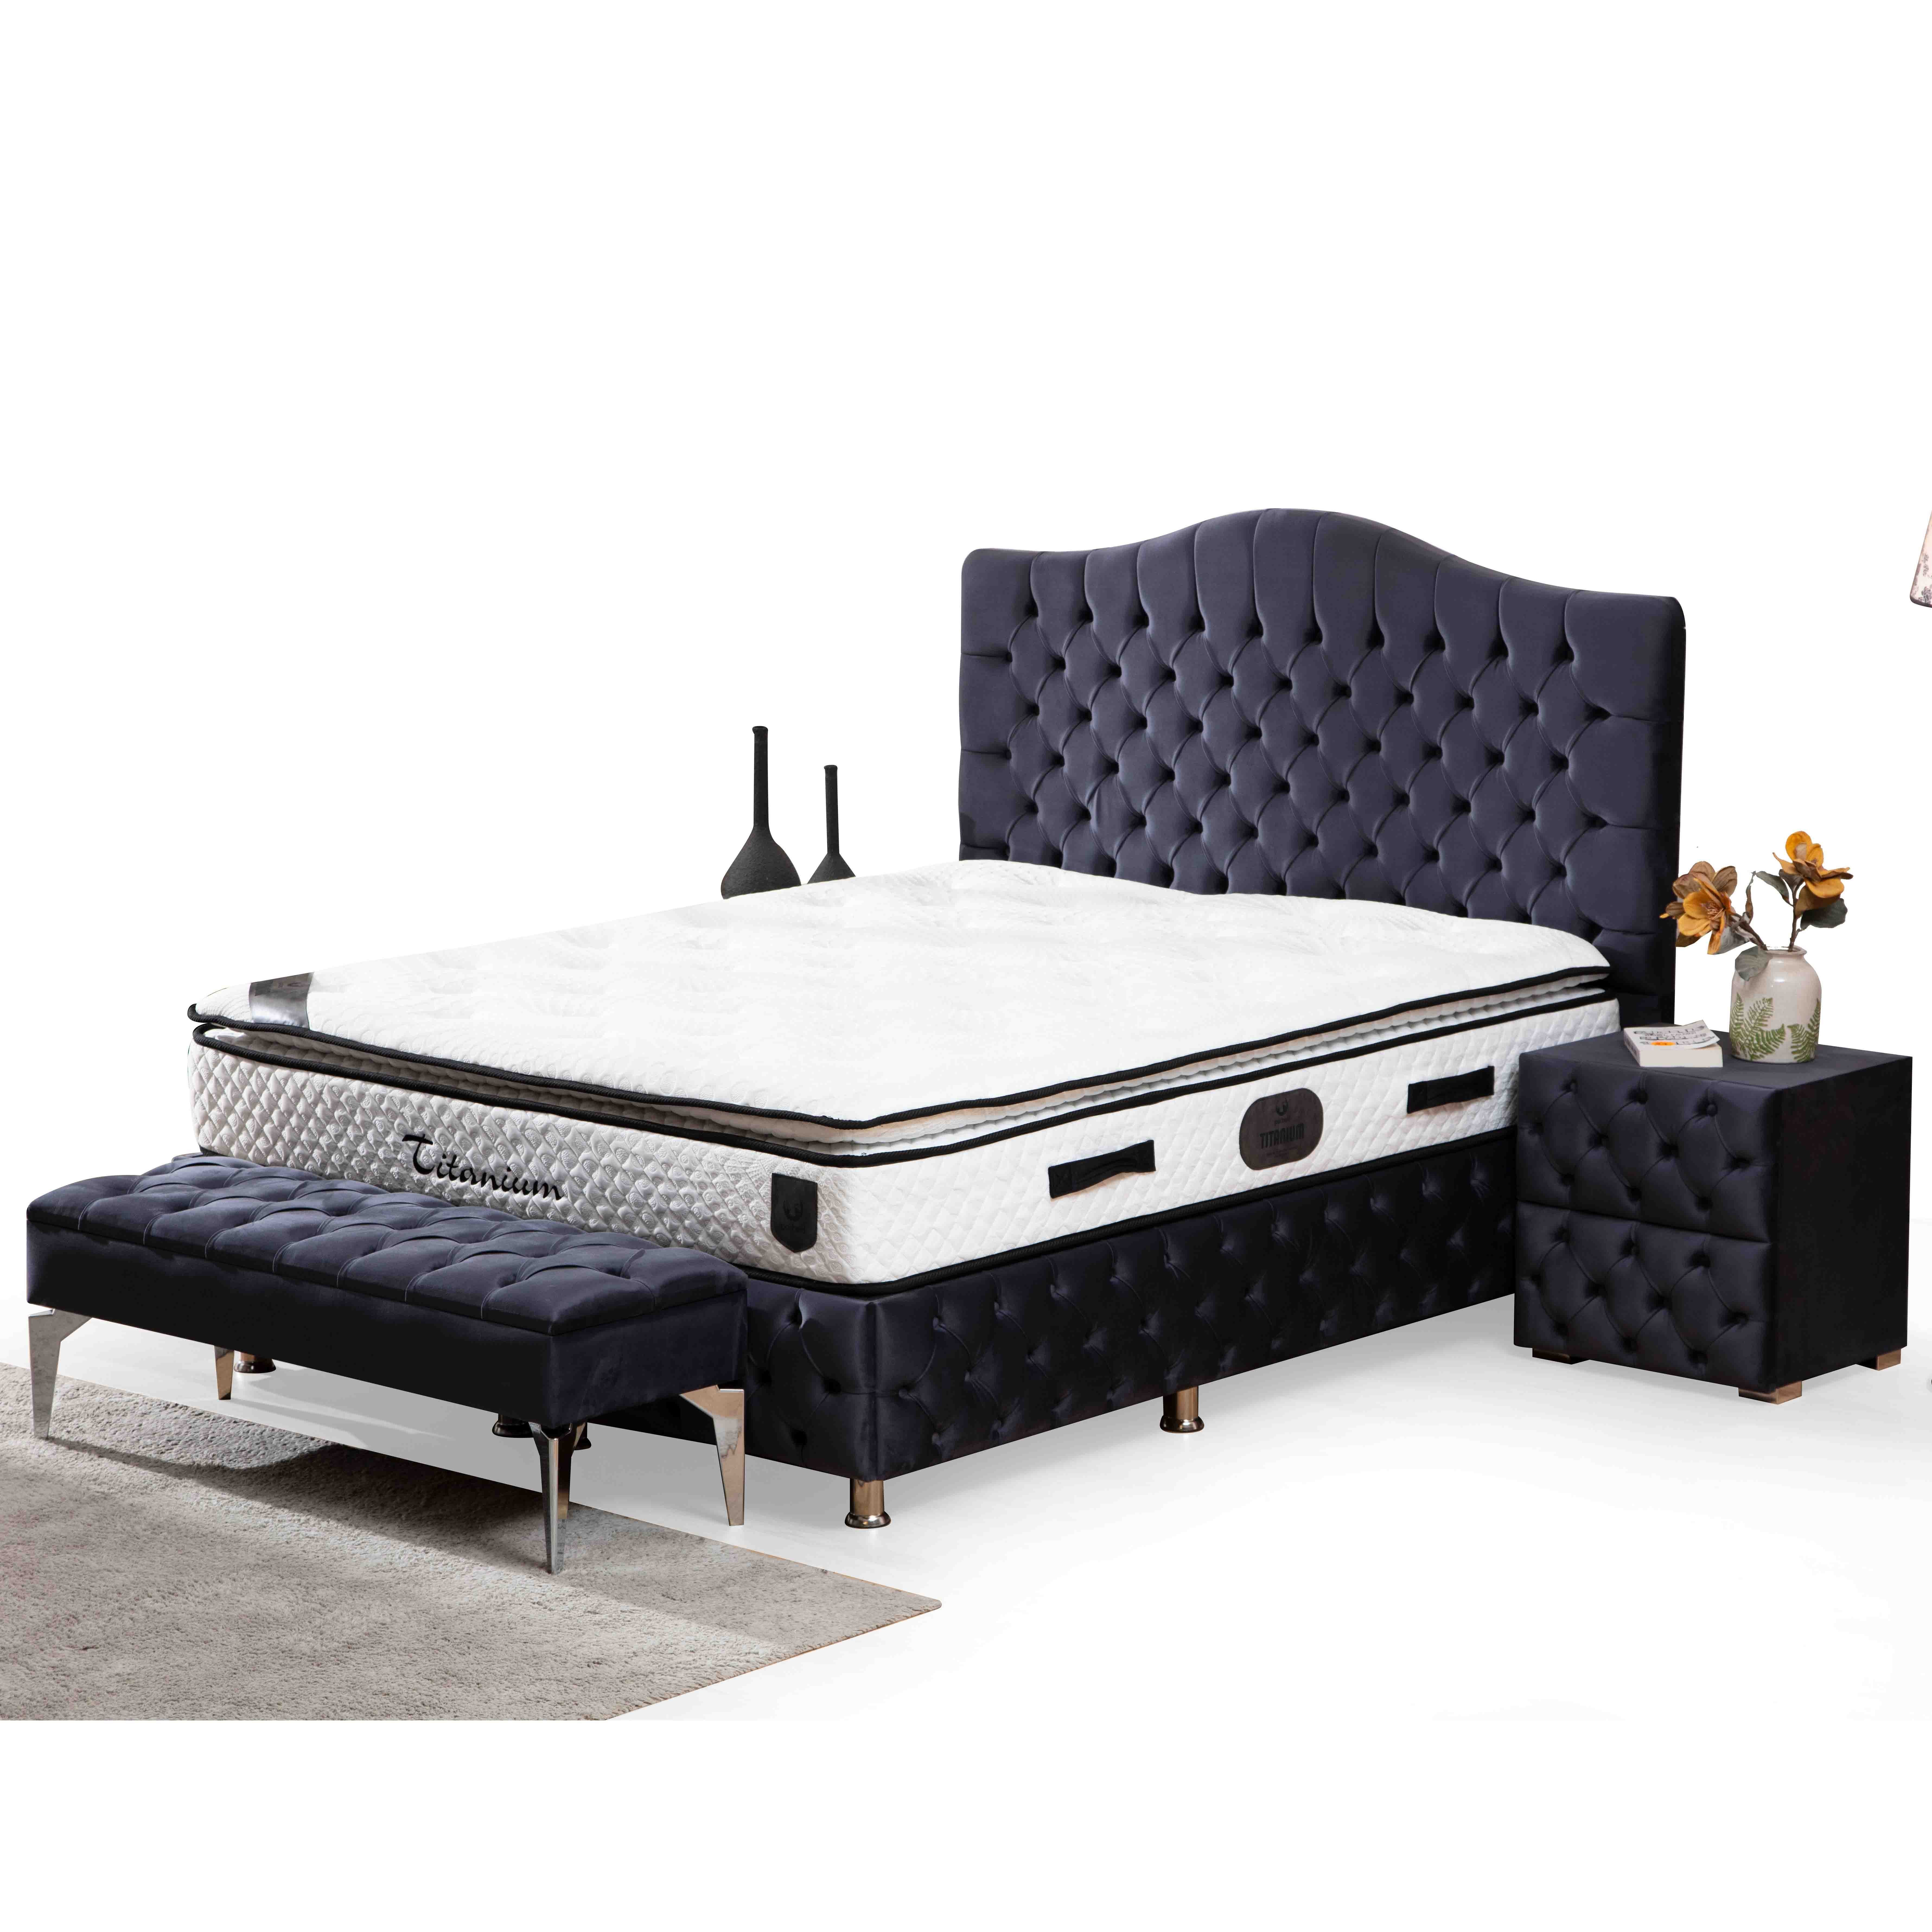 Paris Bed With Storage 160*200